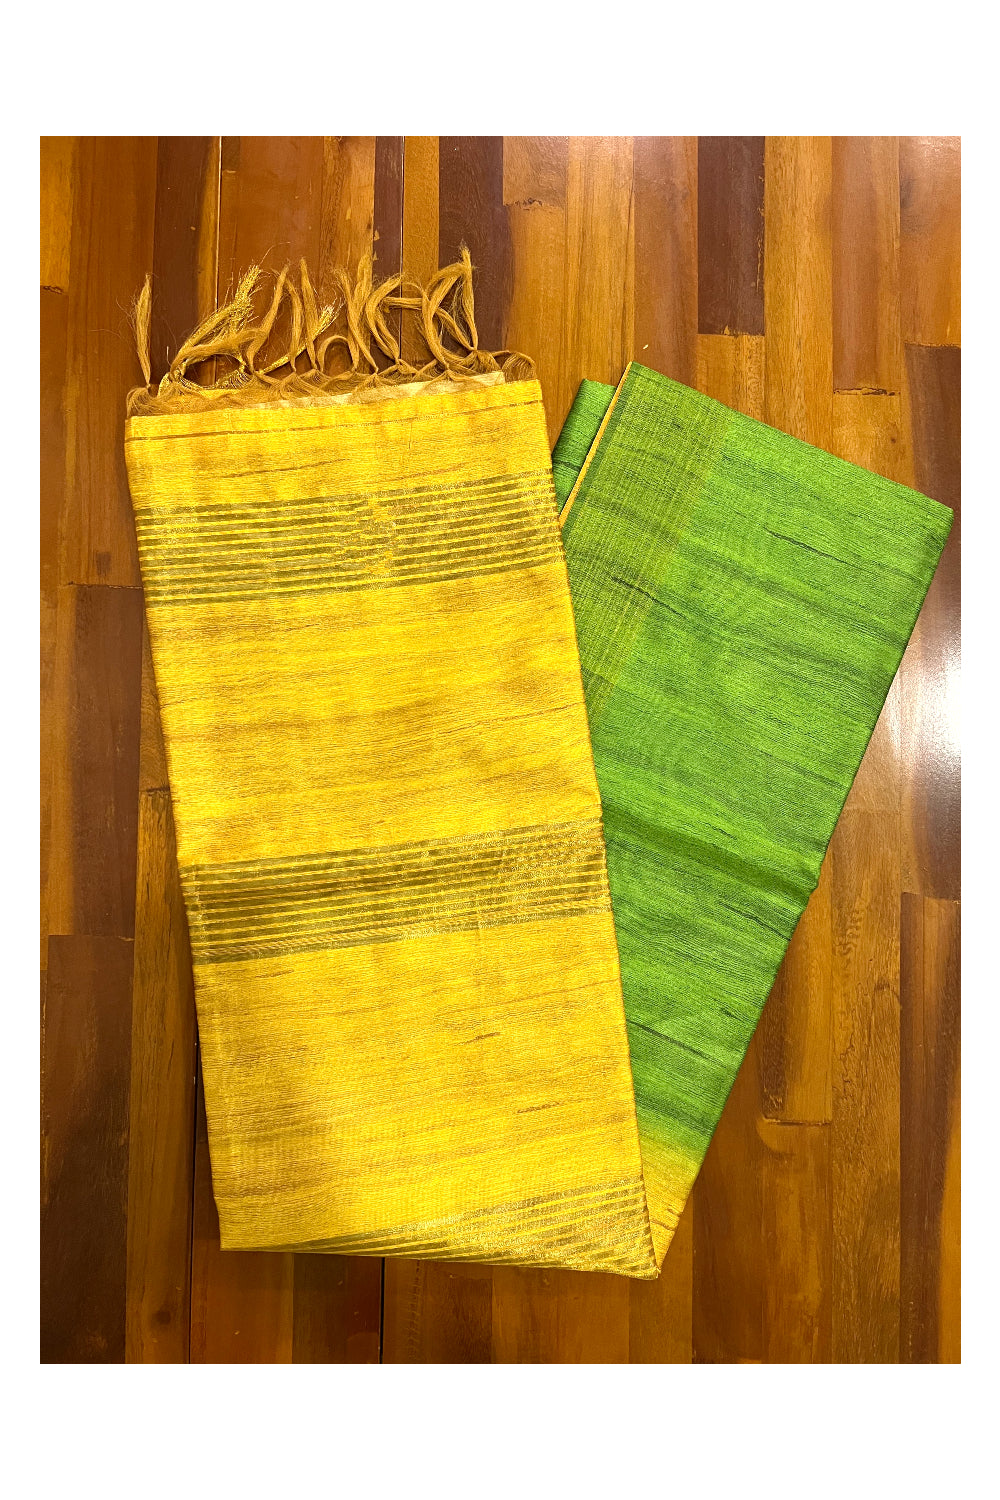 Southloom Green Semi Tussar Designer Saree with Yellow Pallu